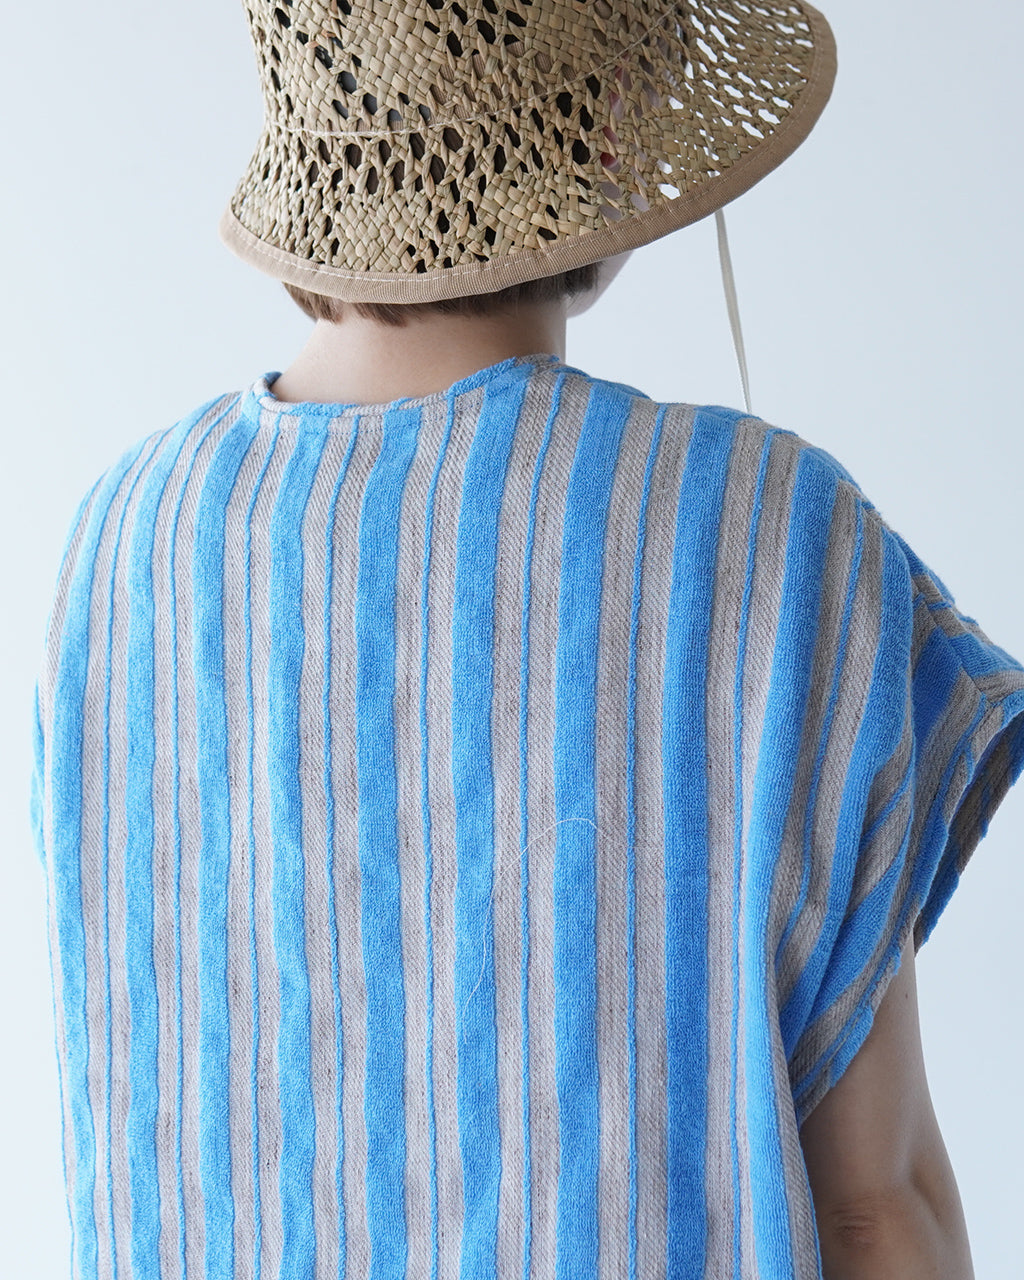 sana サナ Ｖネック ドレス (ジャガード ストライプ) v-neck dress(jacquard stripe)ワンピース ノースリーブ satp-0704【送料無料】